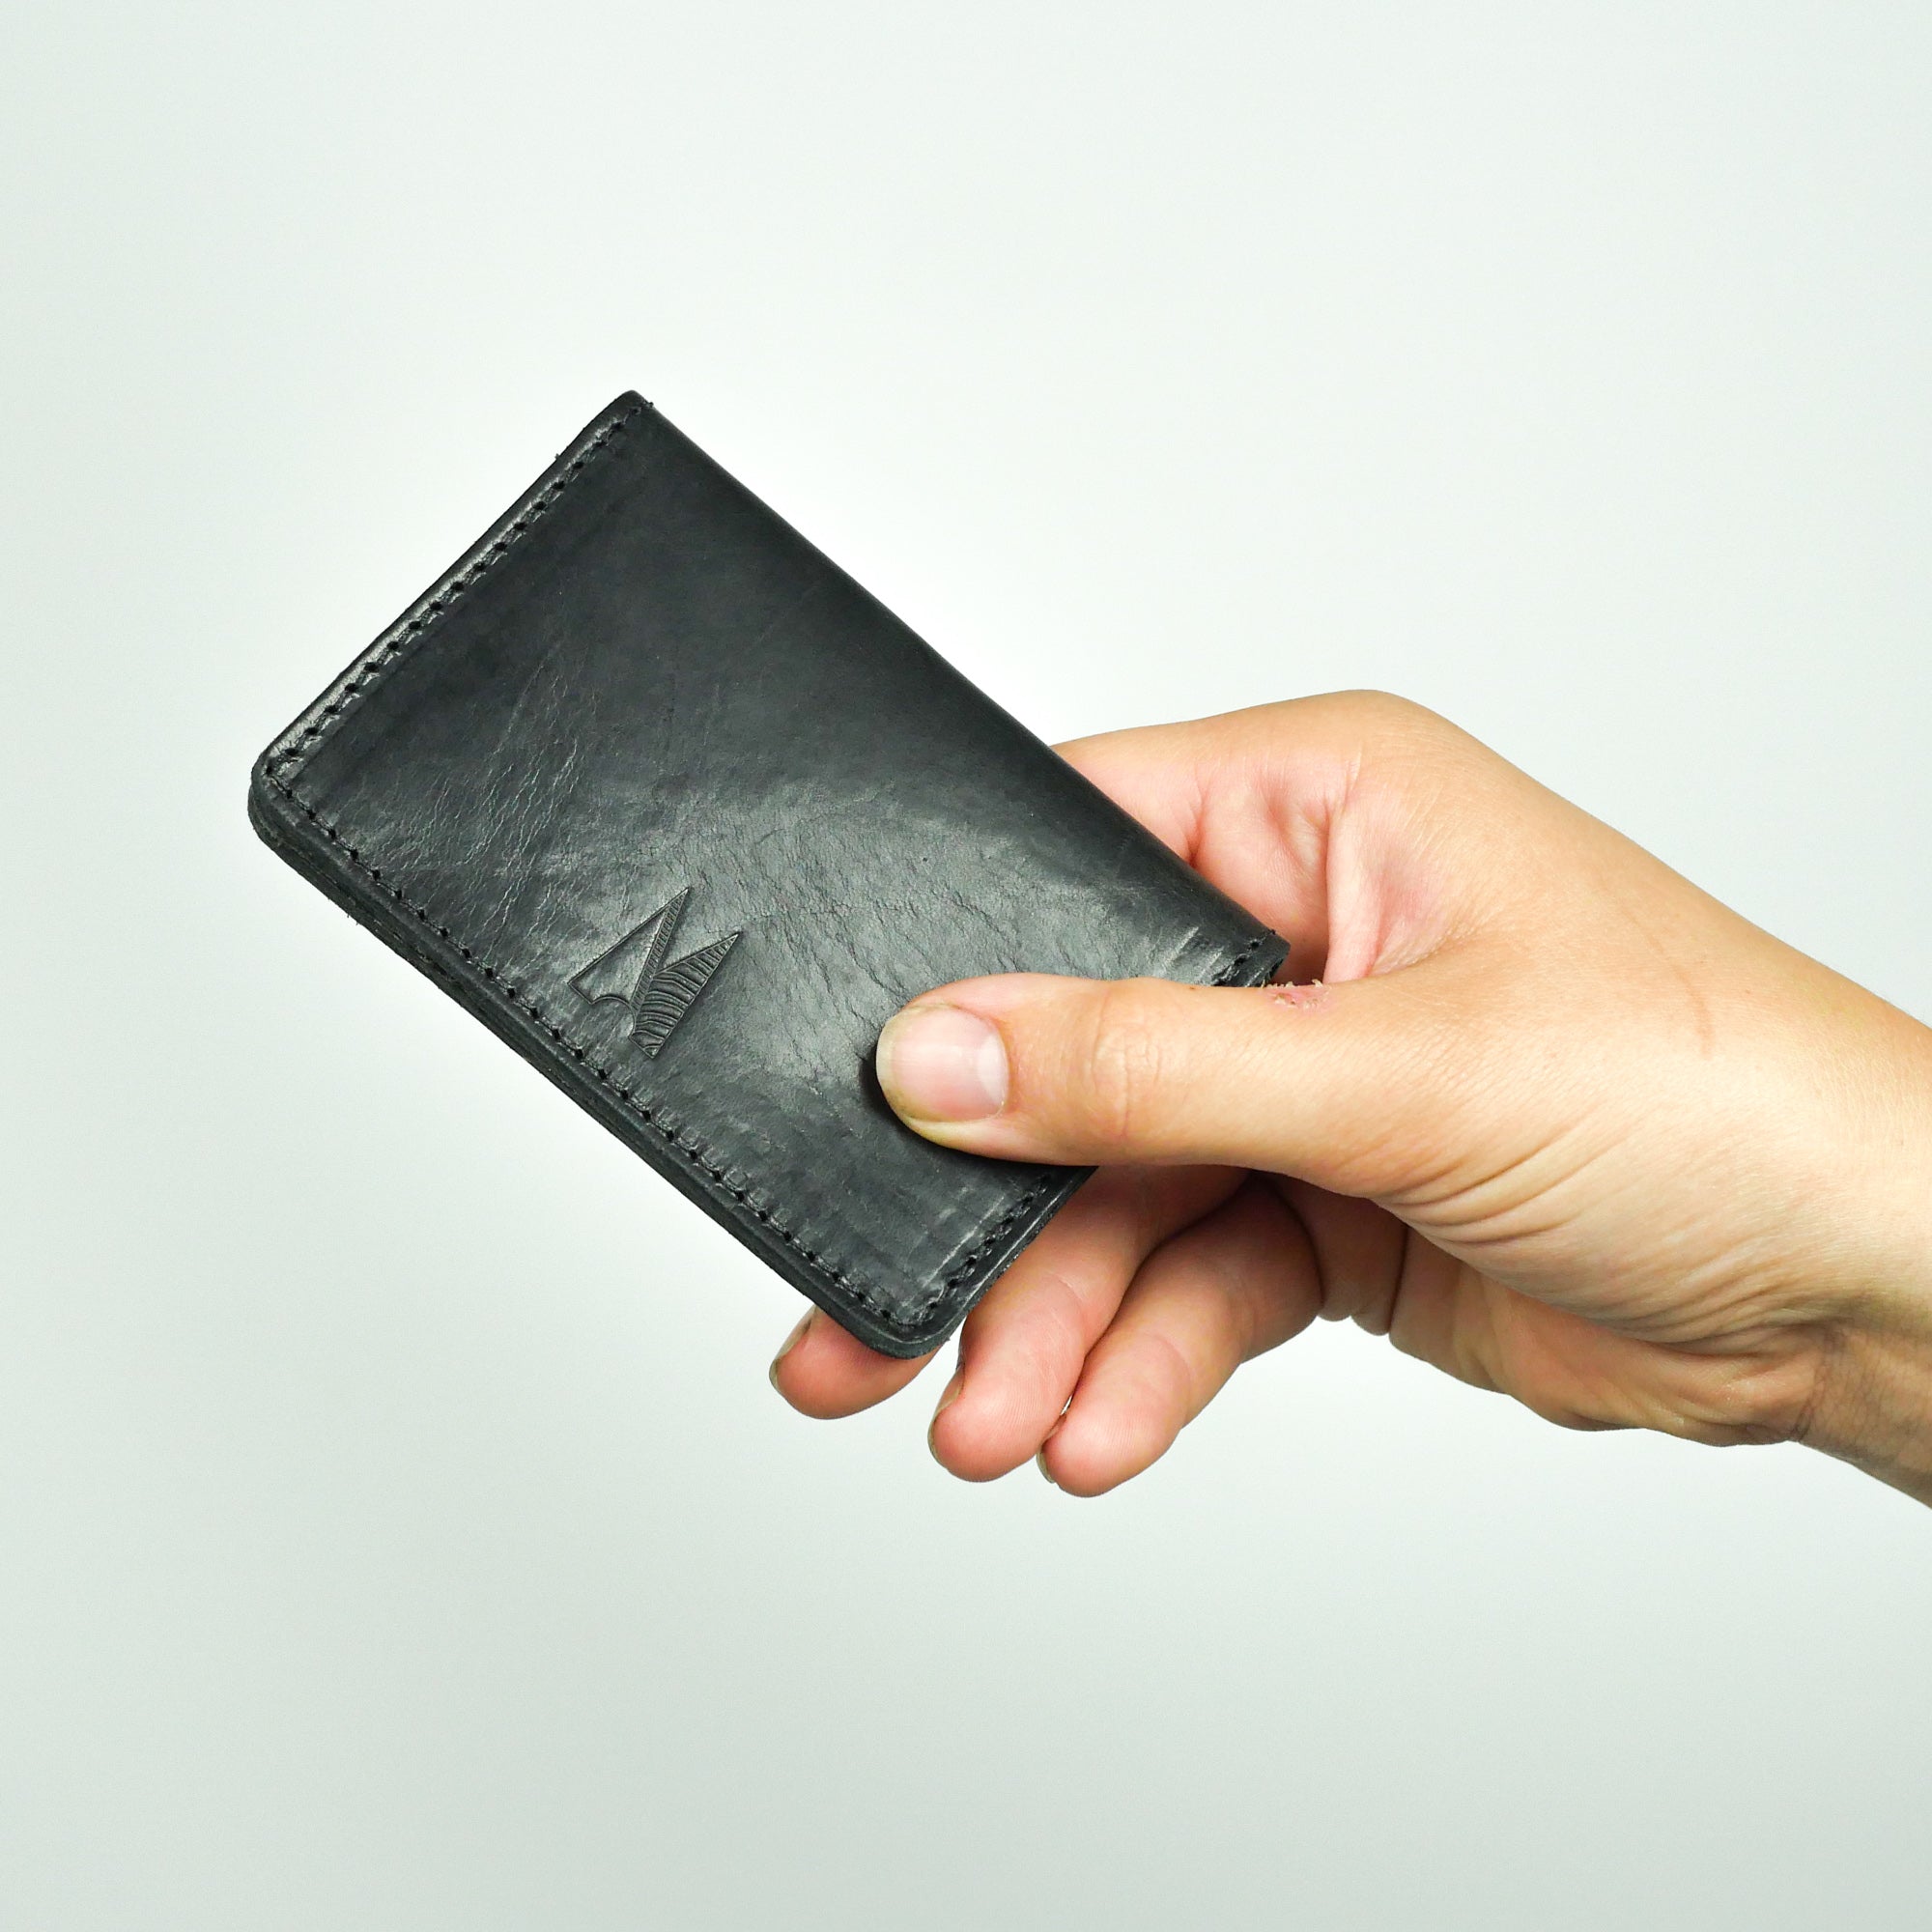 Missouri Black Leather Card Holder